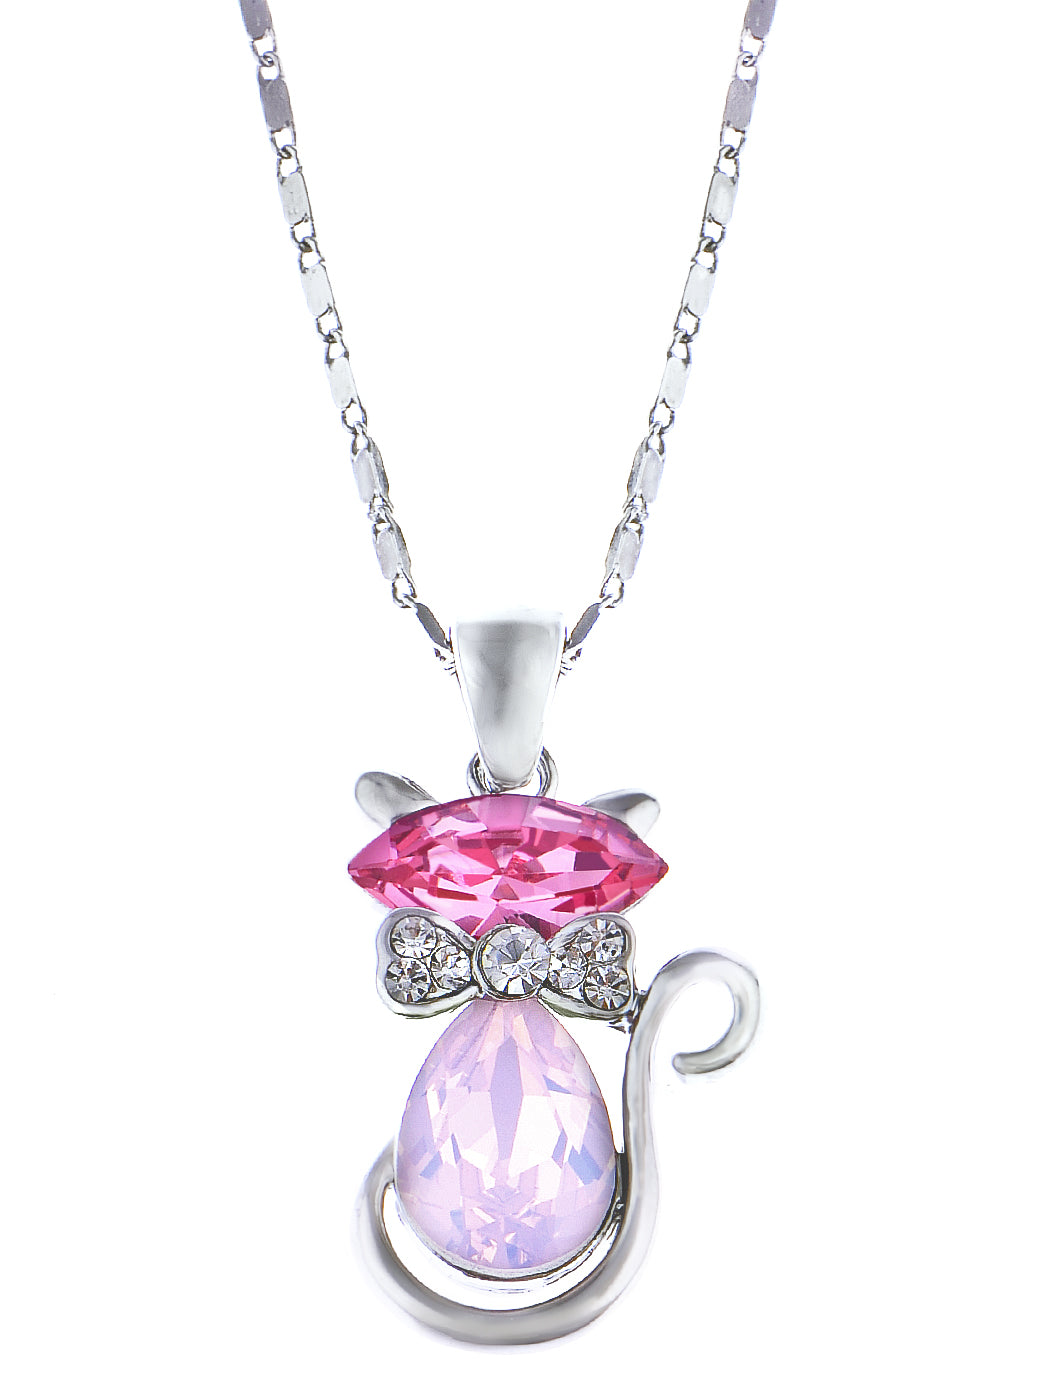 Swarovski Crystal Hot Fuchsia Pink Opal Bow Tie Siam Kitty Cat Pendant Necklace